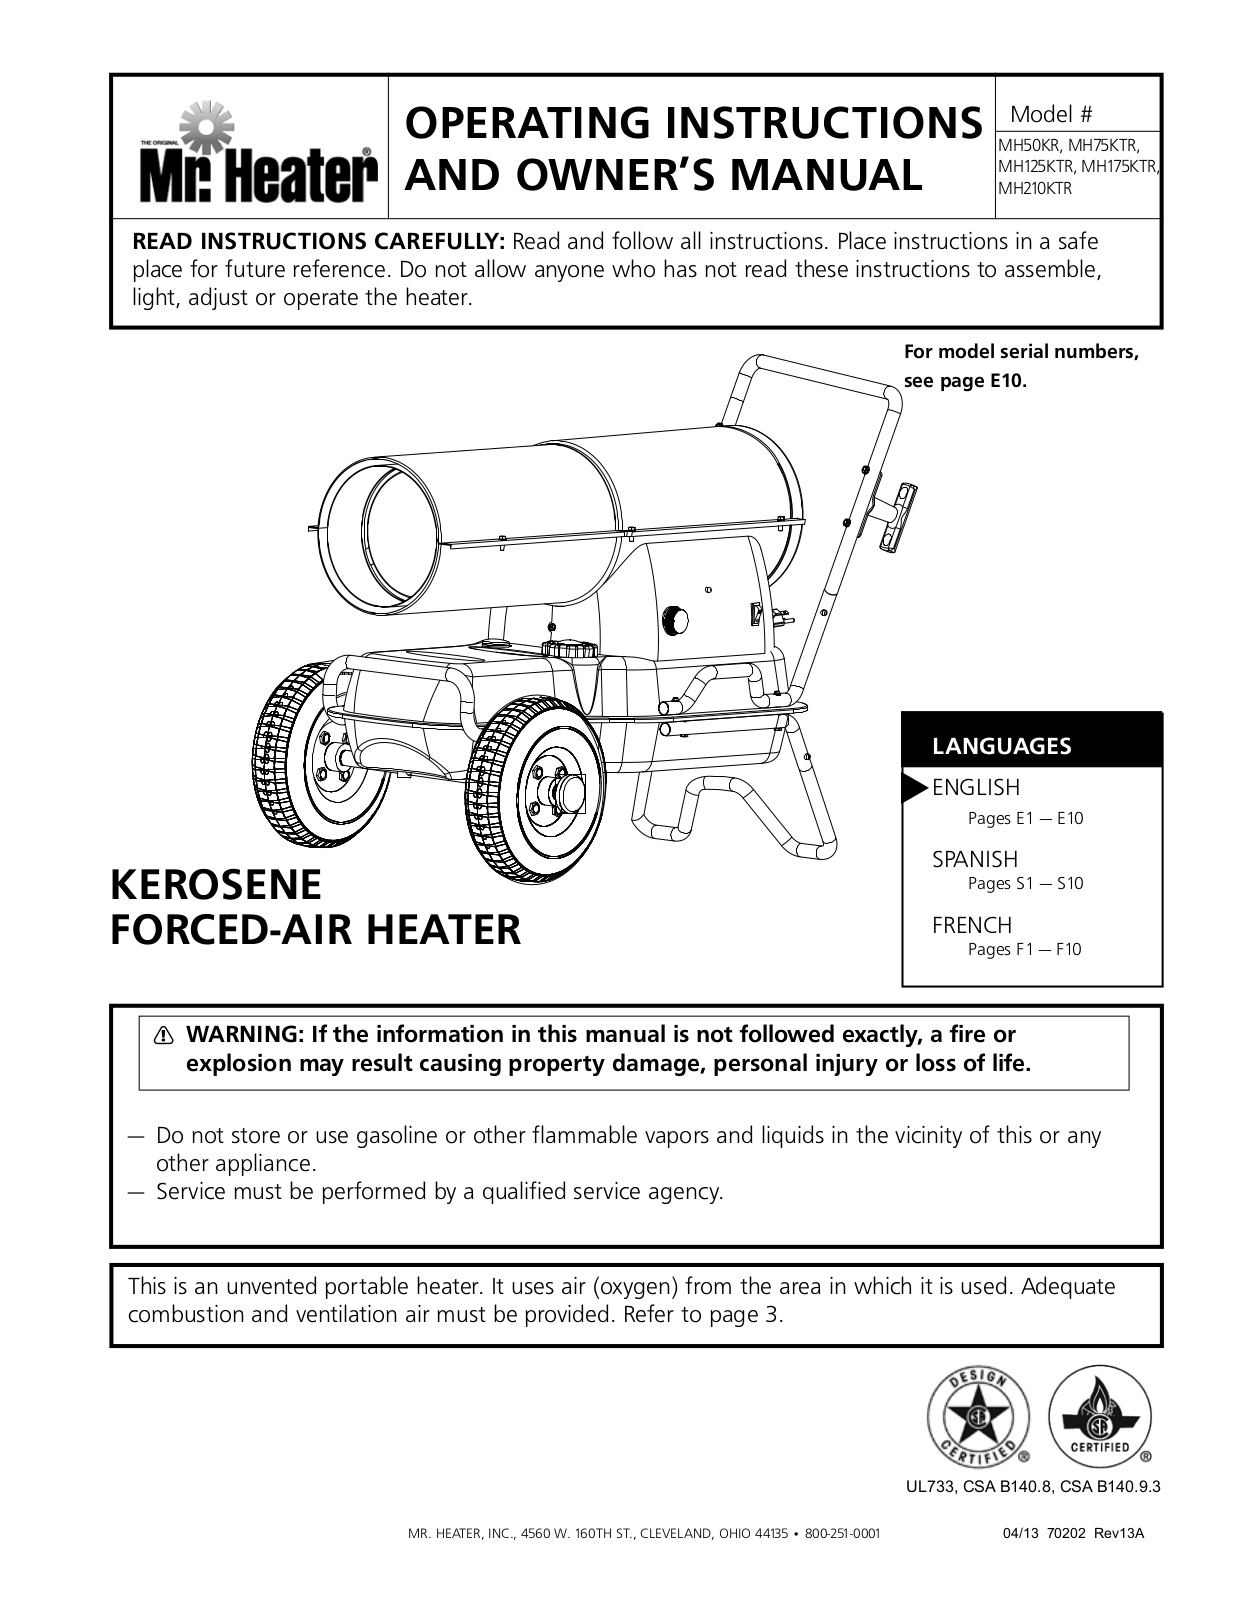 Mr. Heater MH210KTR User Manual